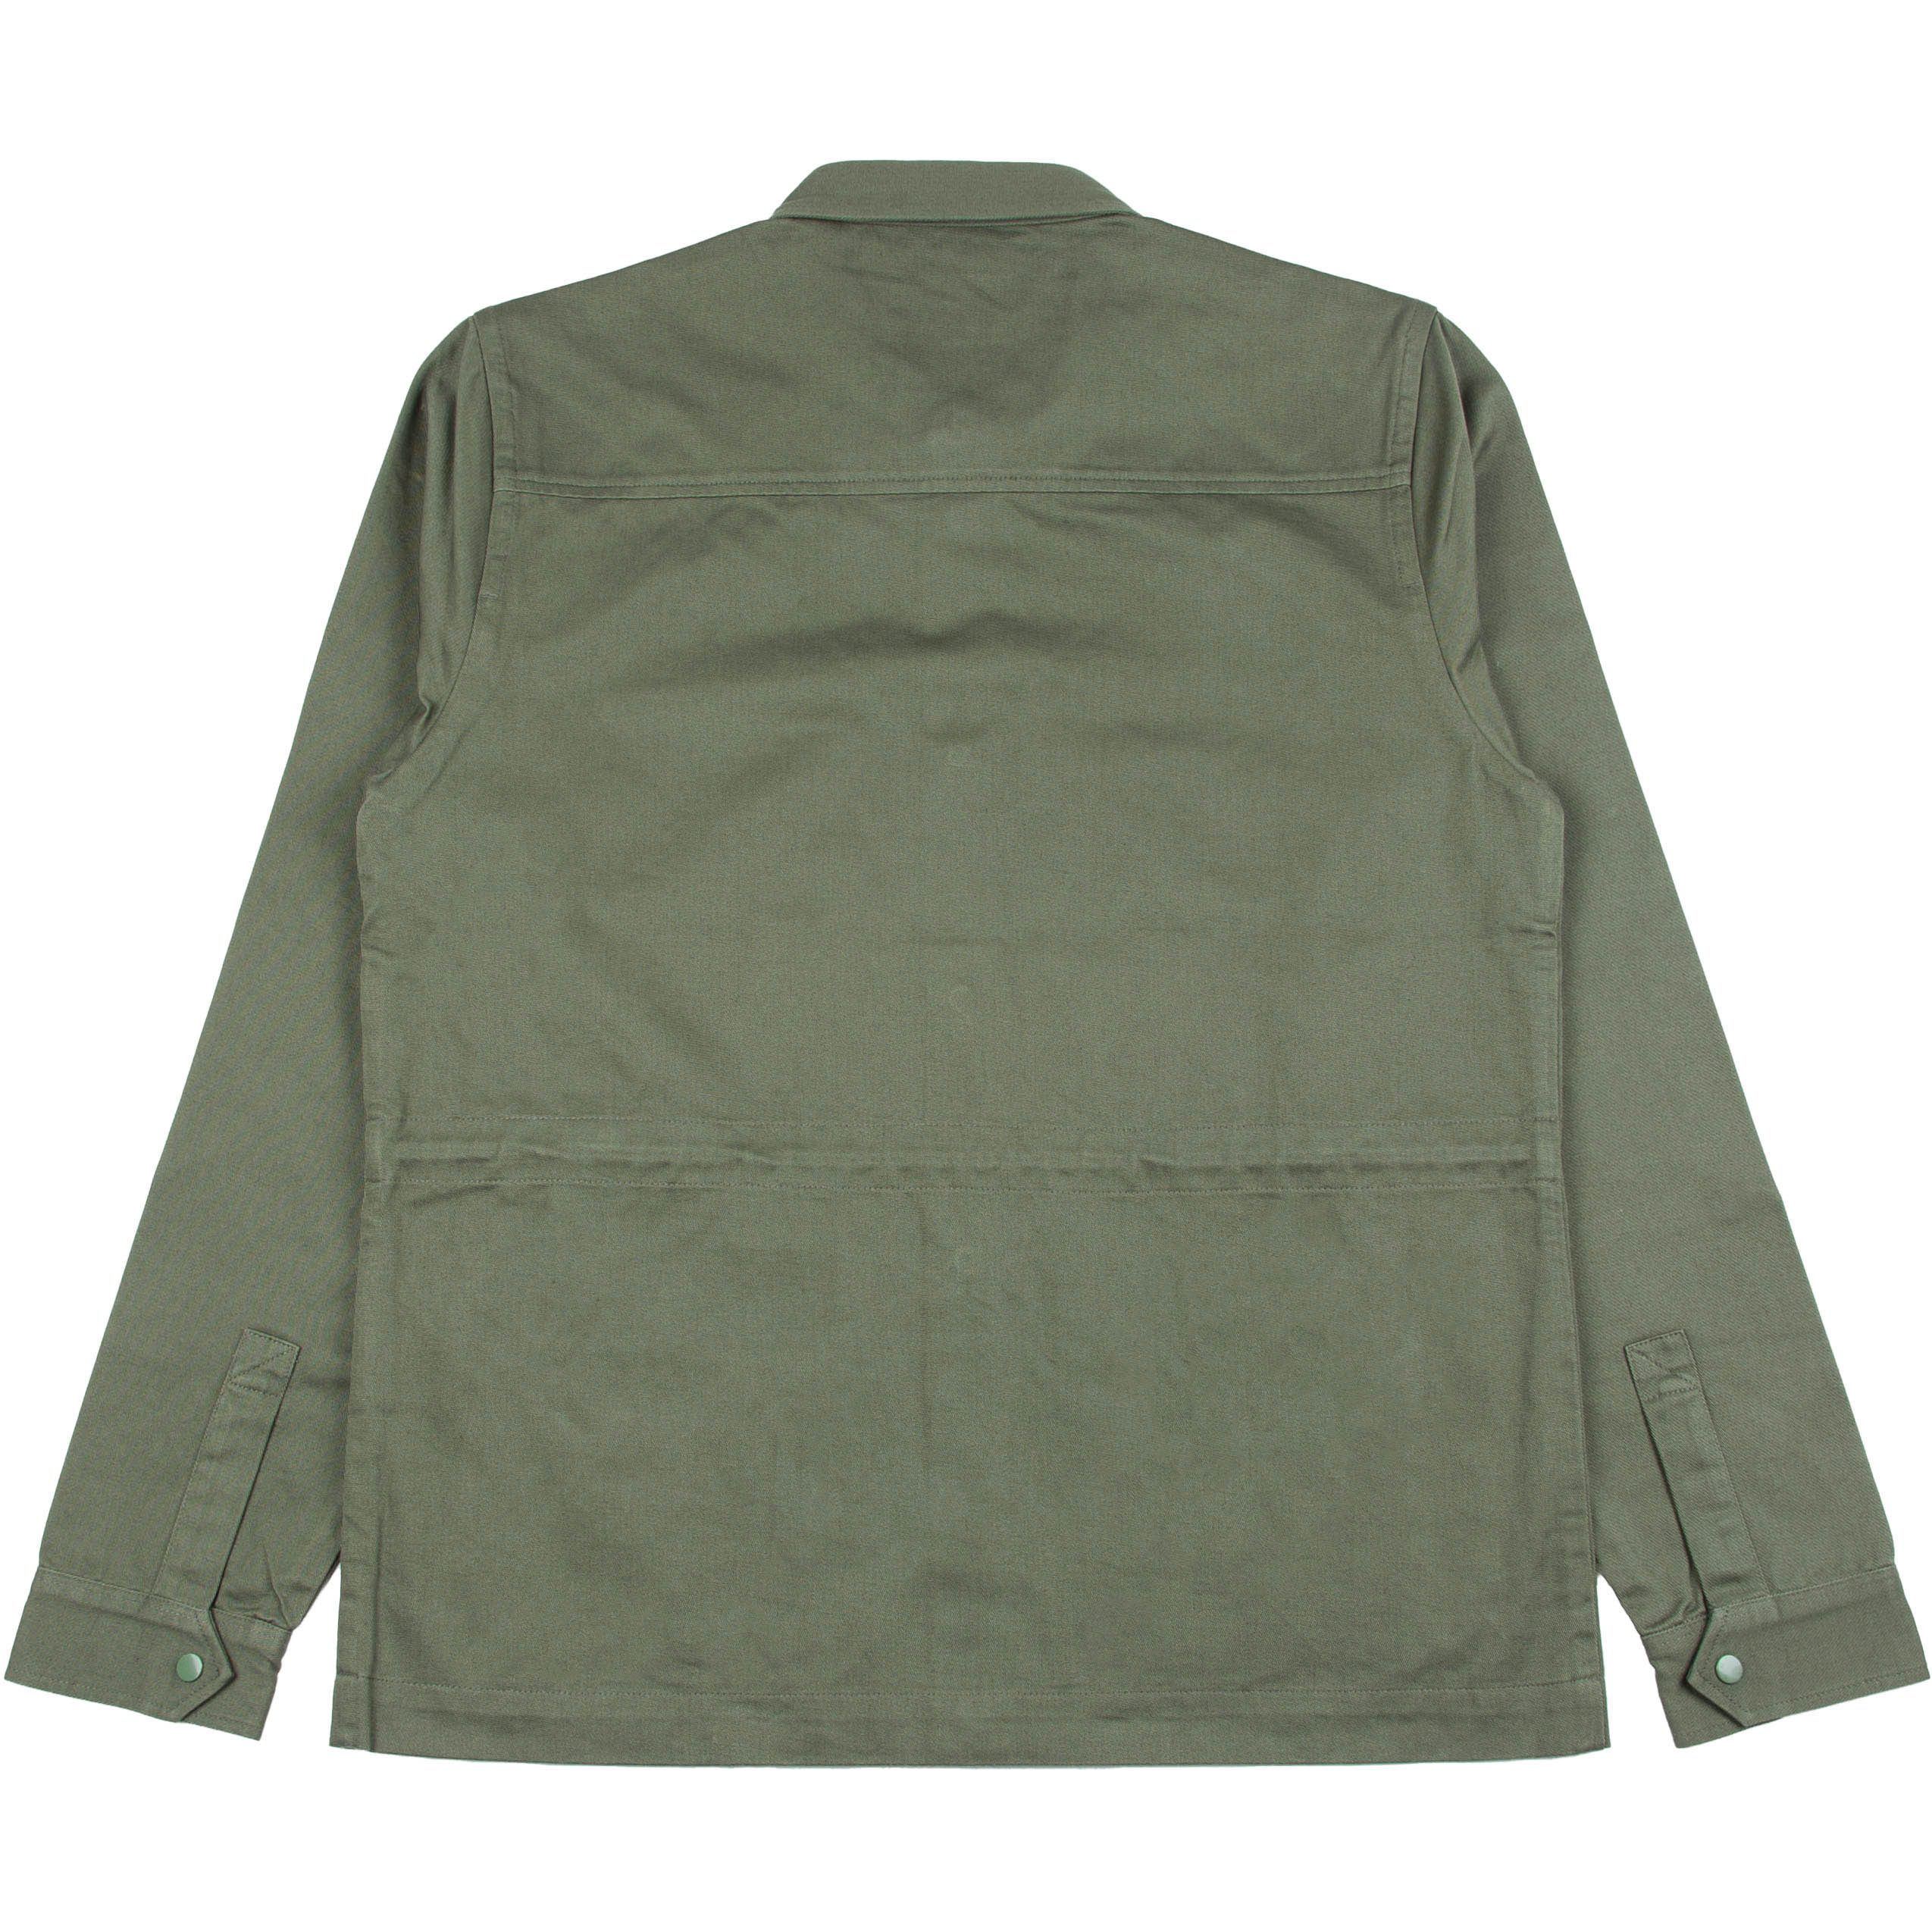 Folk | Assembly Jacket - Military Green